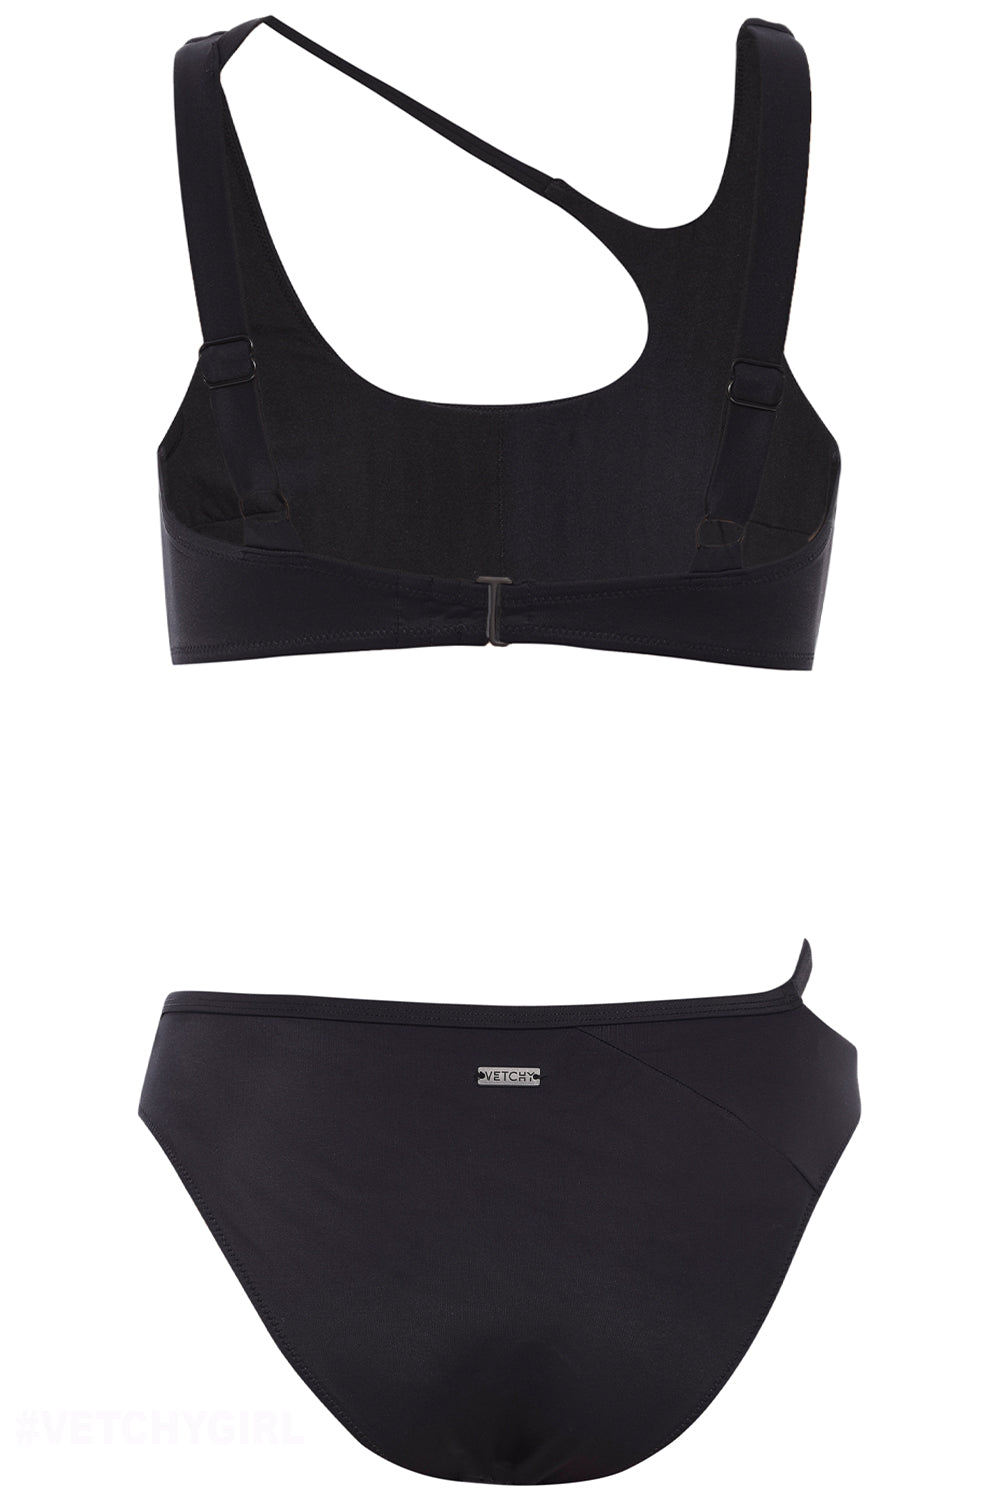 Asymmetric Bikini Black Set on white background back view.